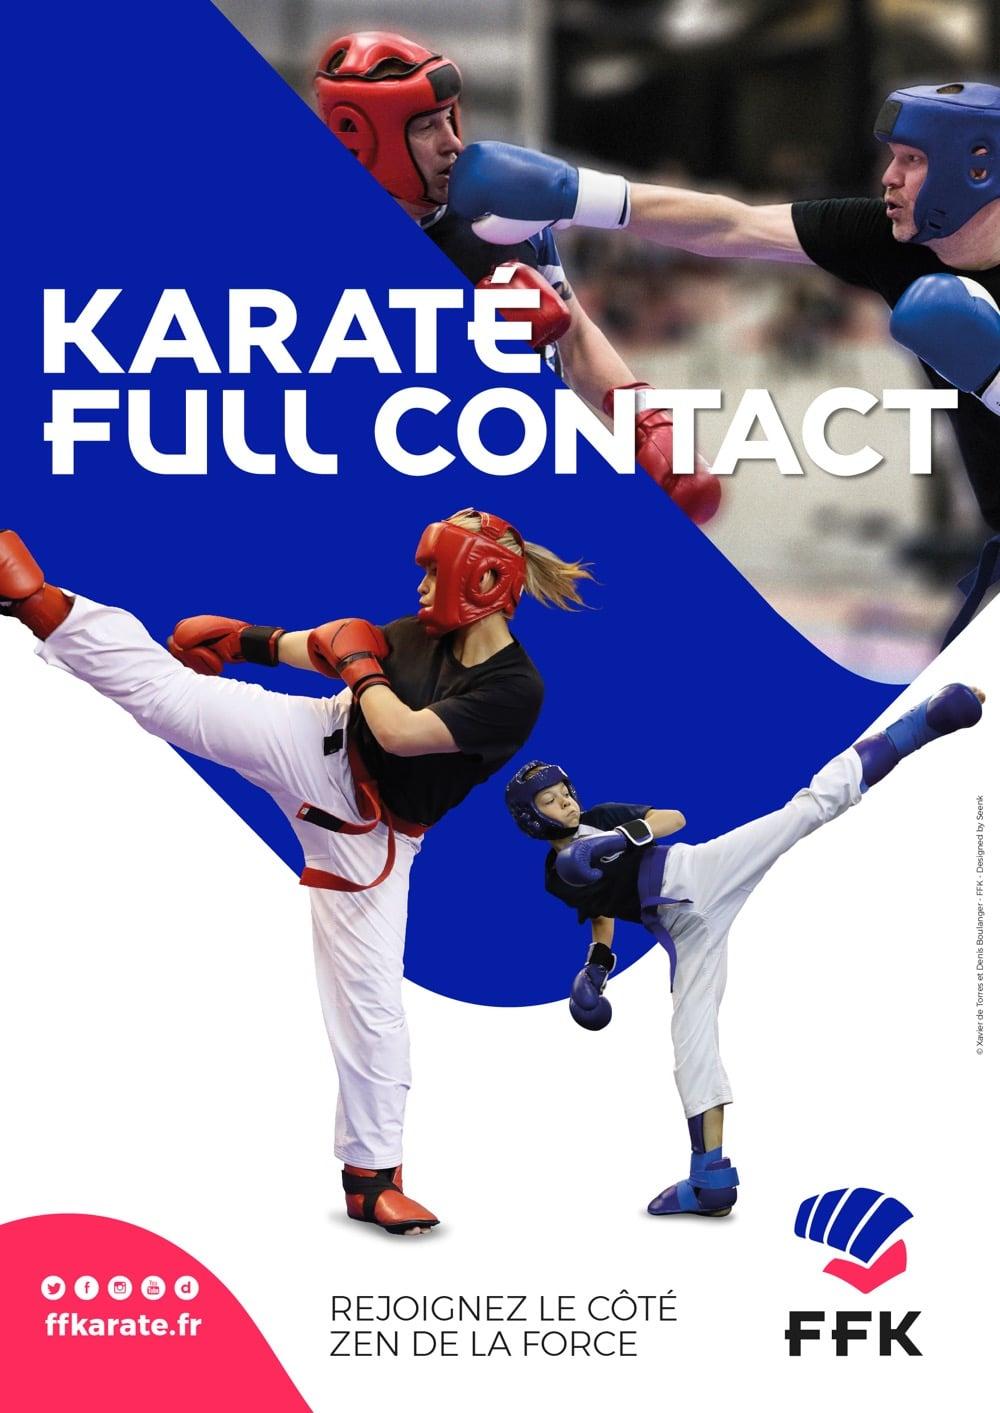 Karate full contact ffk copie 2